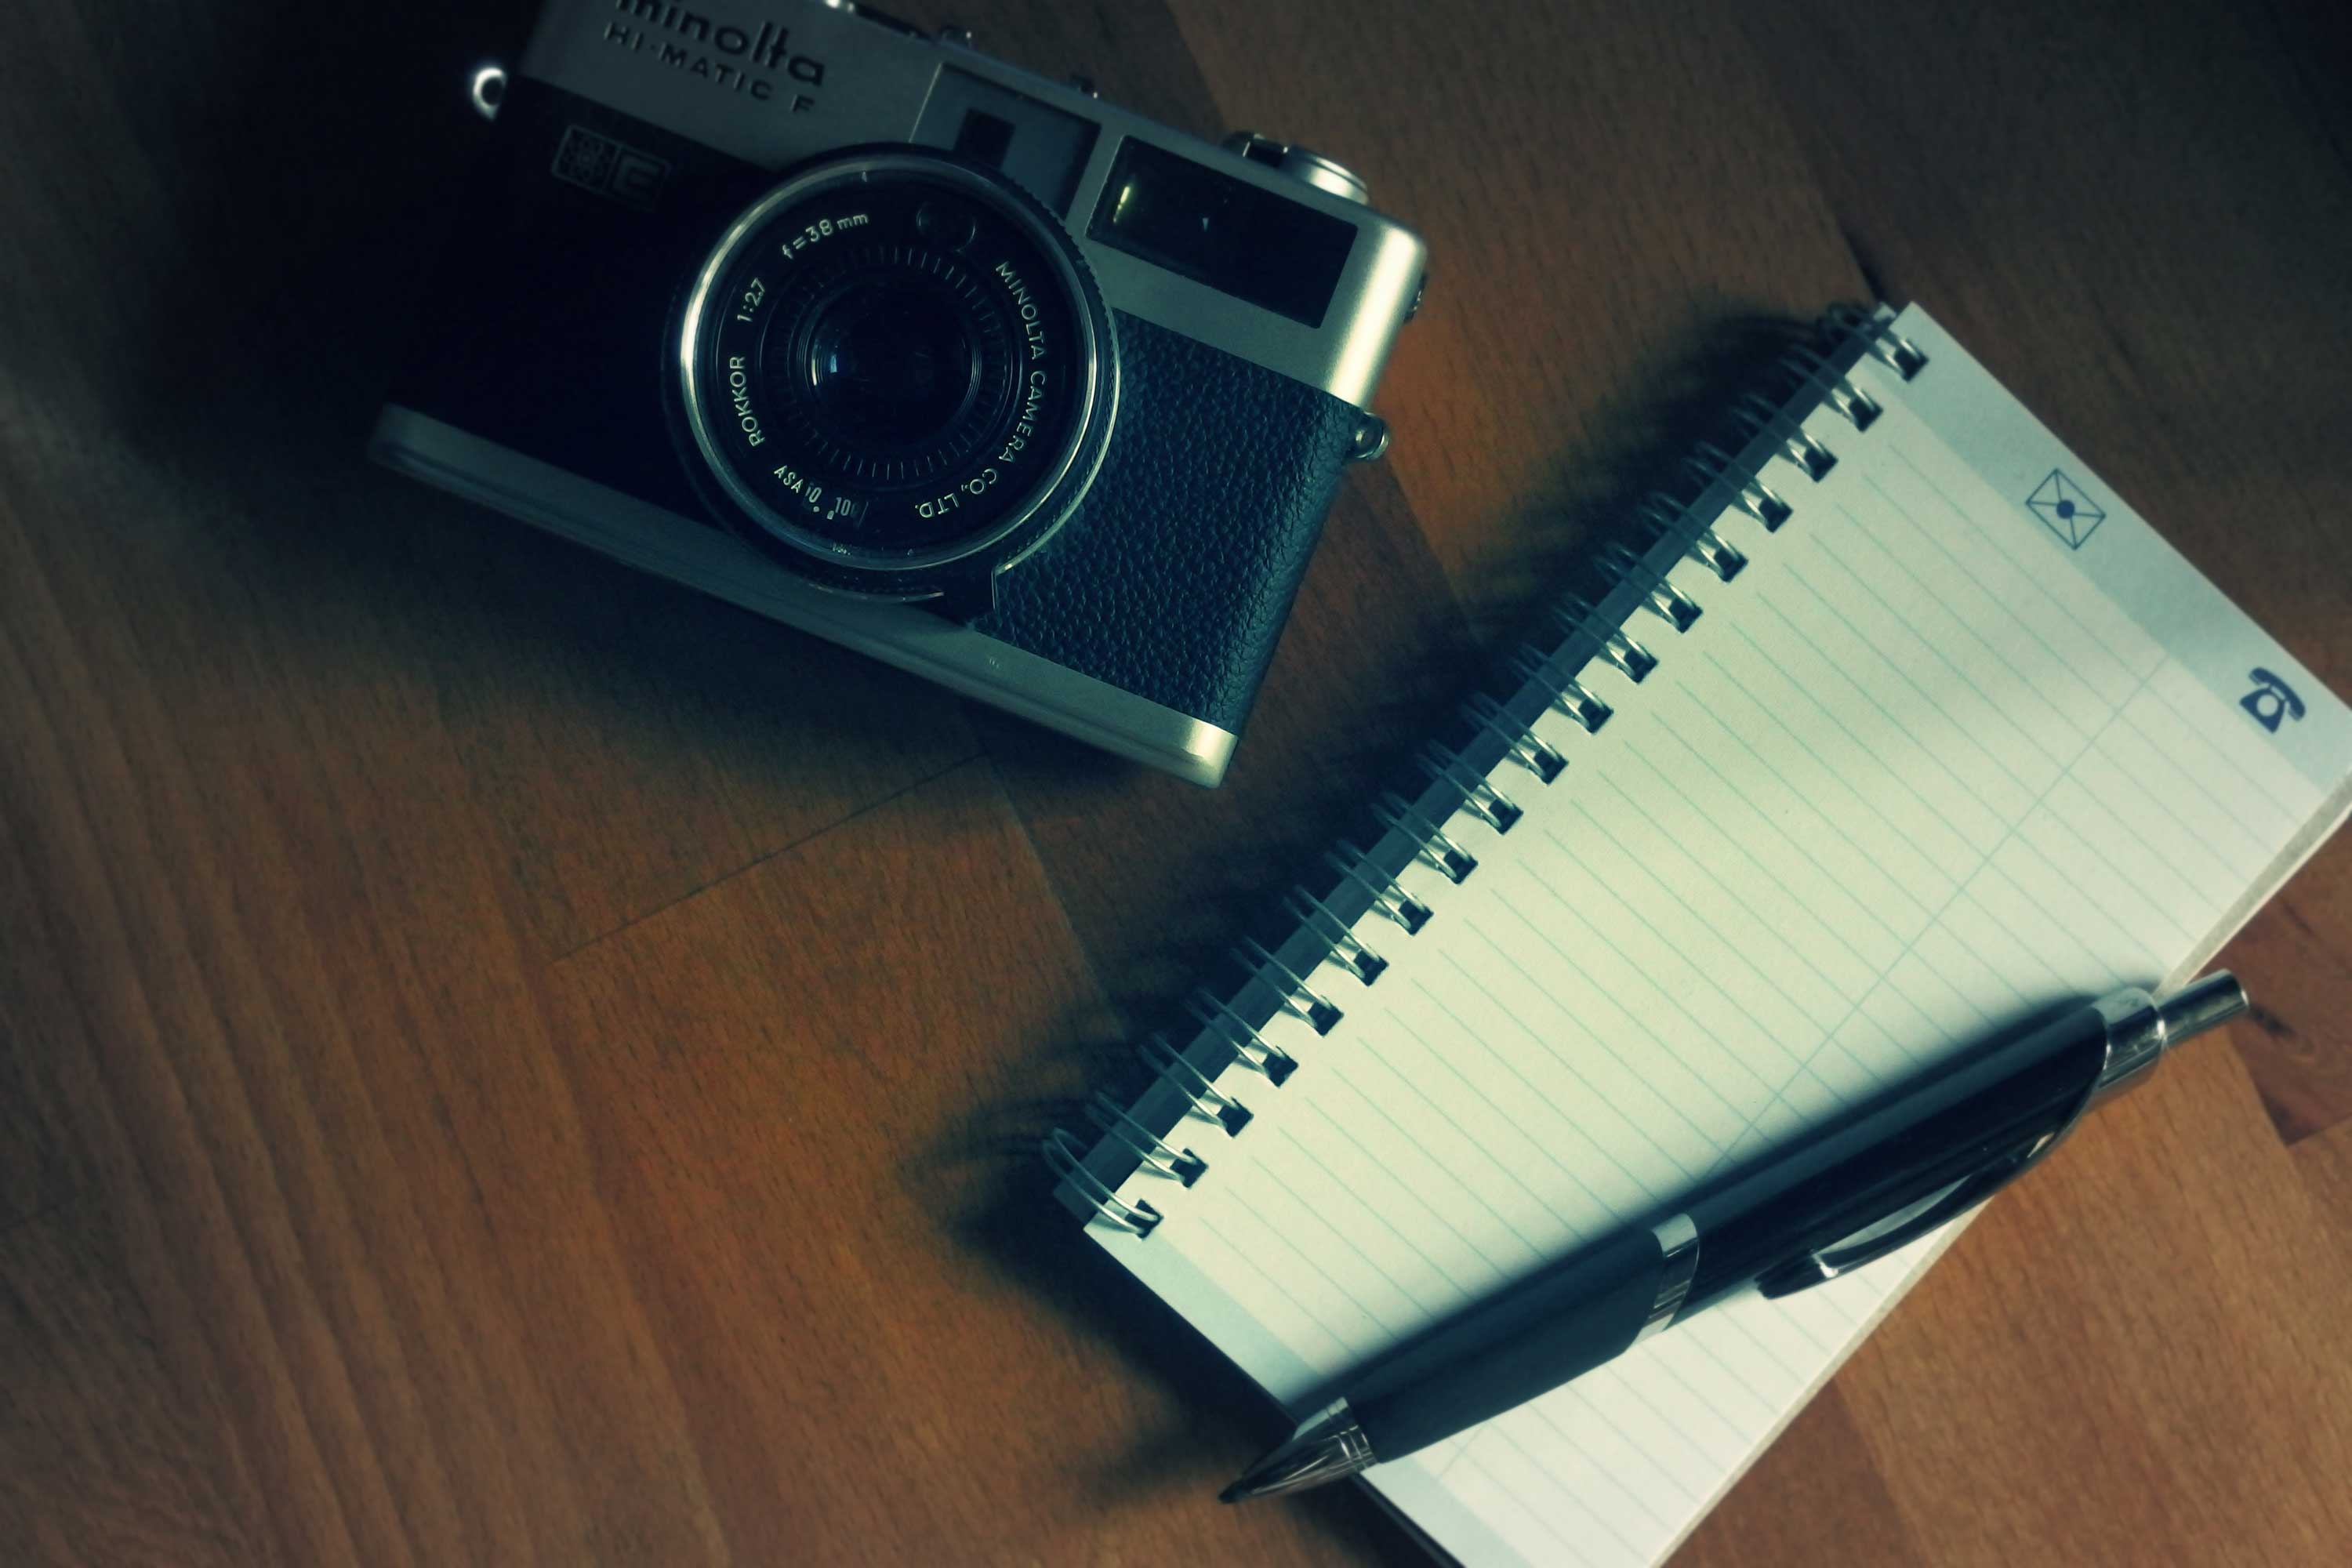 white spiral notebook click pen and minolta camera